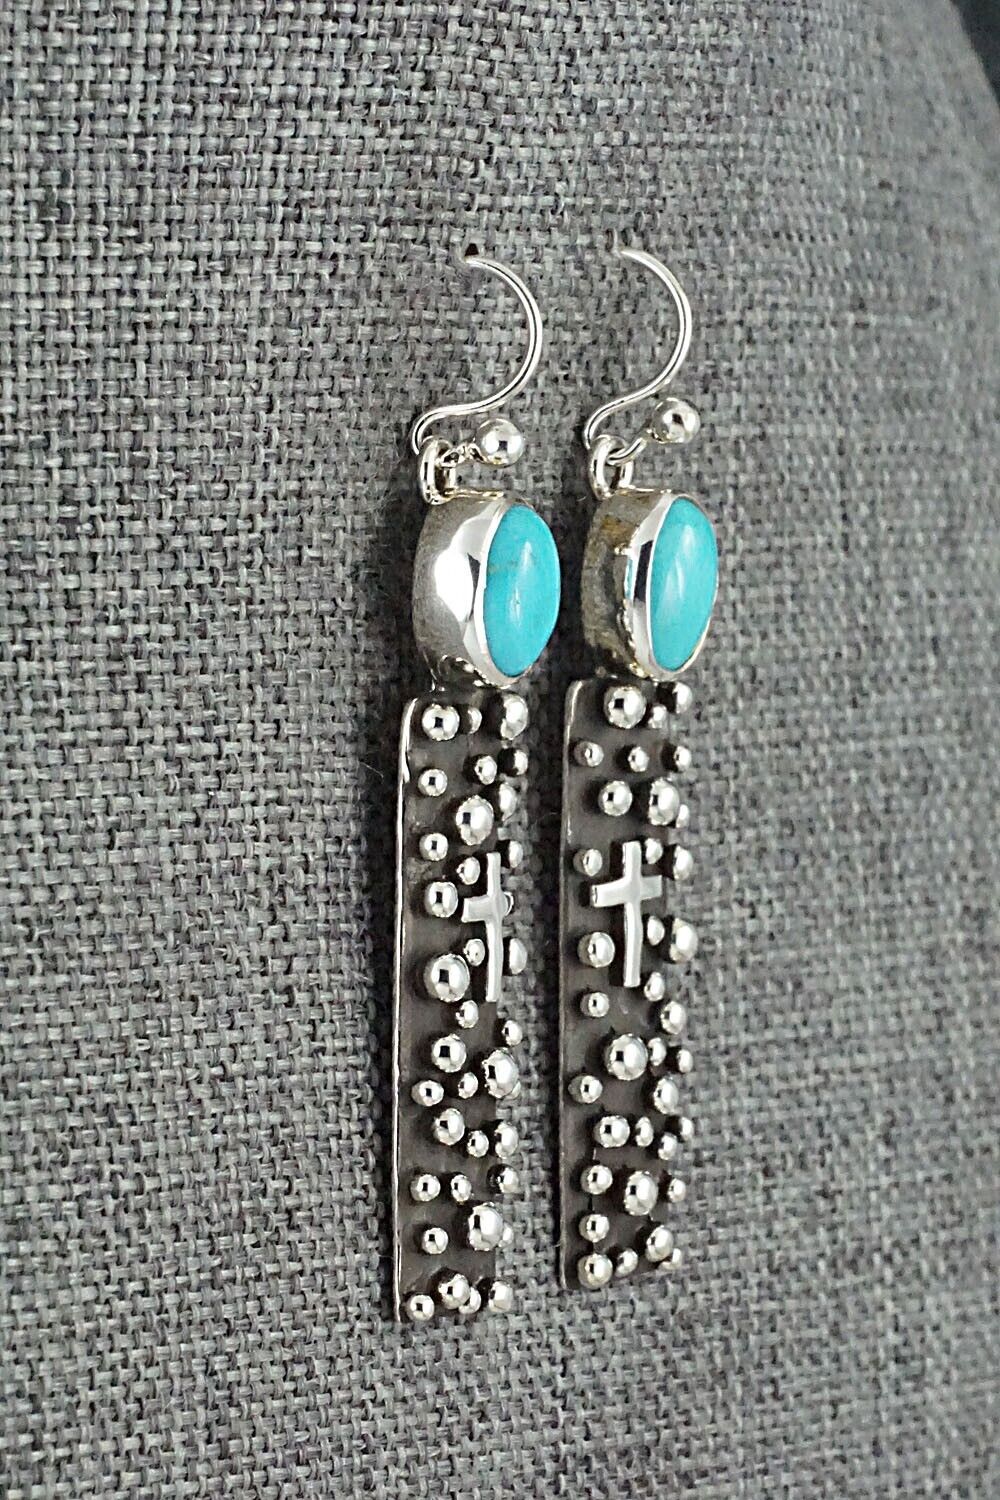 Turquoise & Sterling Silver Earrings - Raymond Coriz